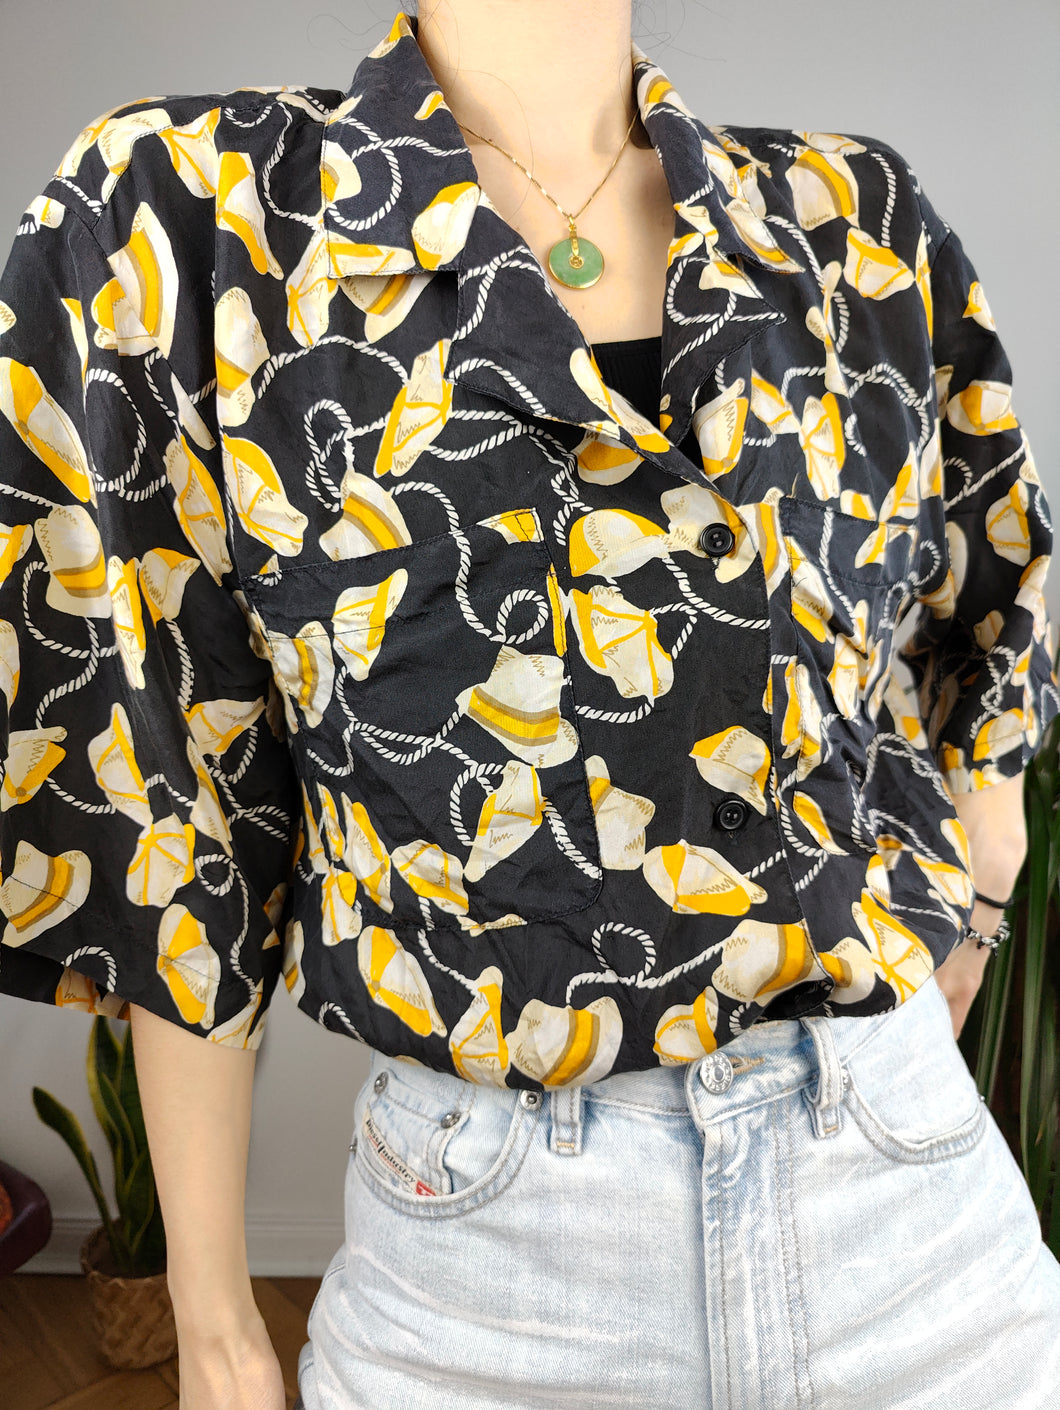 Vintage 100% silk shirt fun print pattern black yellow hats short sleeve button up XL